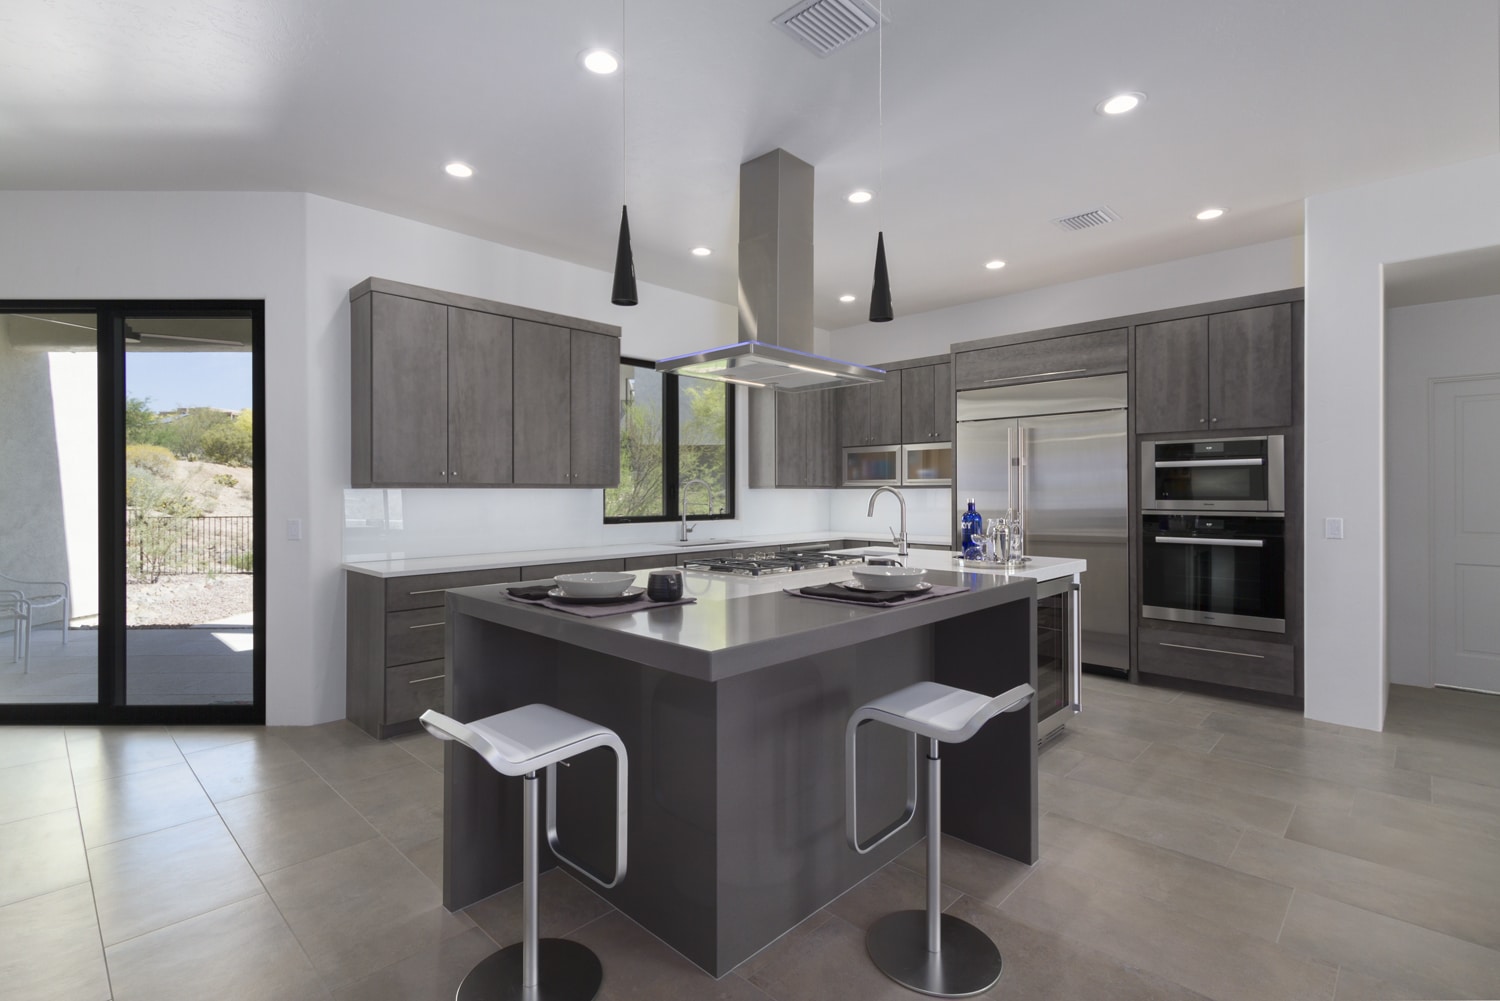 Woodharbor dark brown kitchen cabinets with white countertops and dark grey kitchen island top